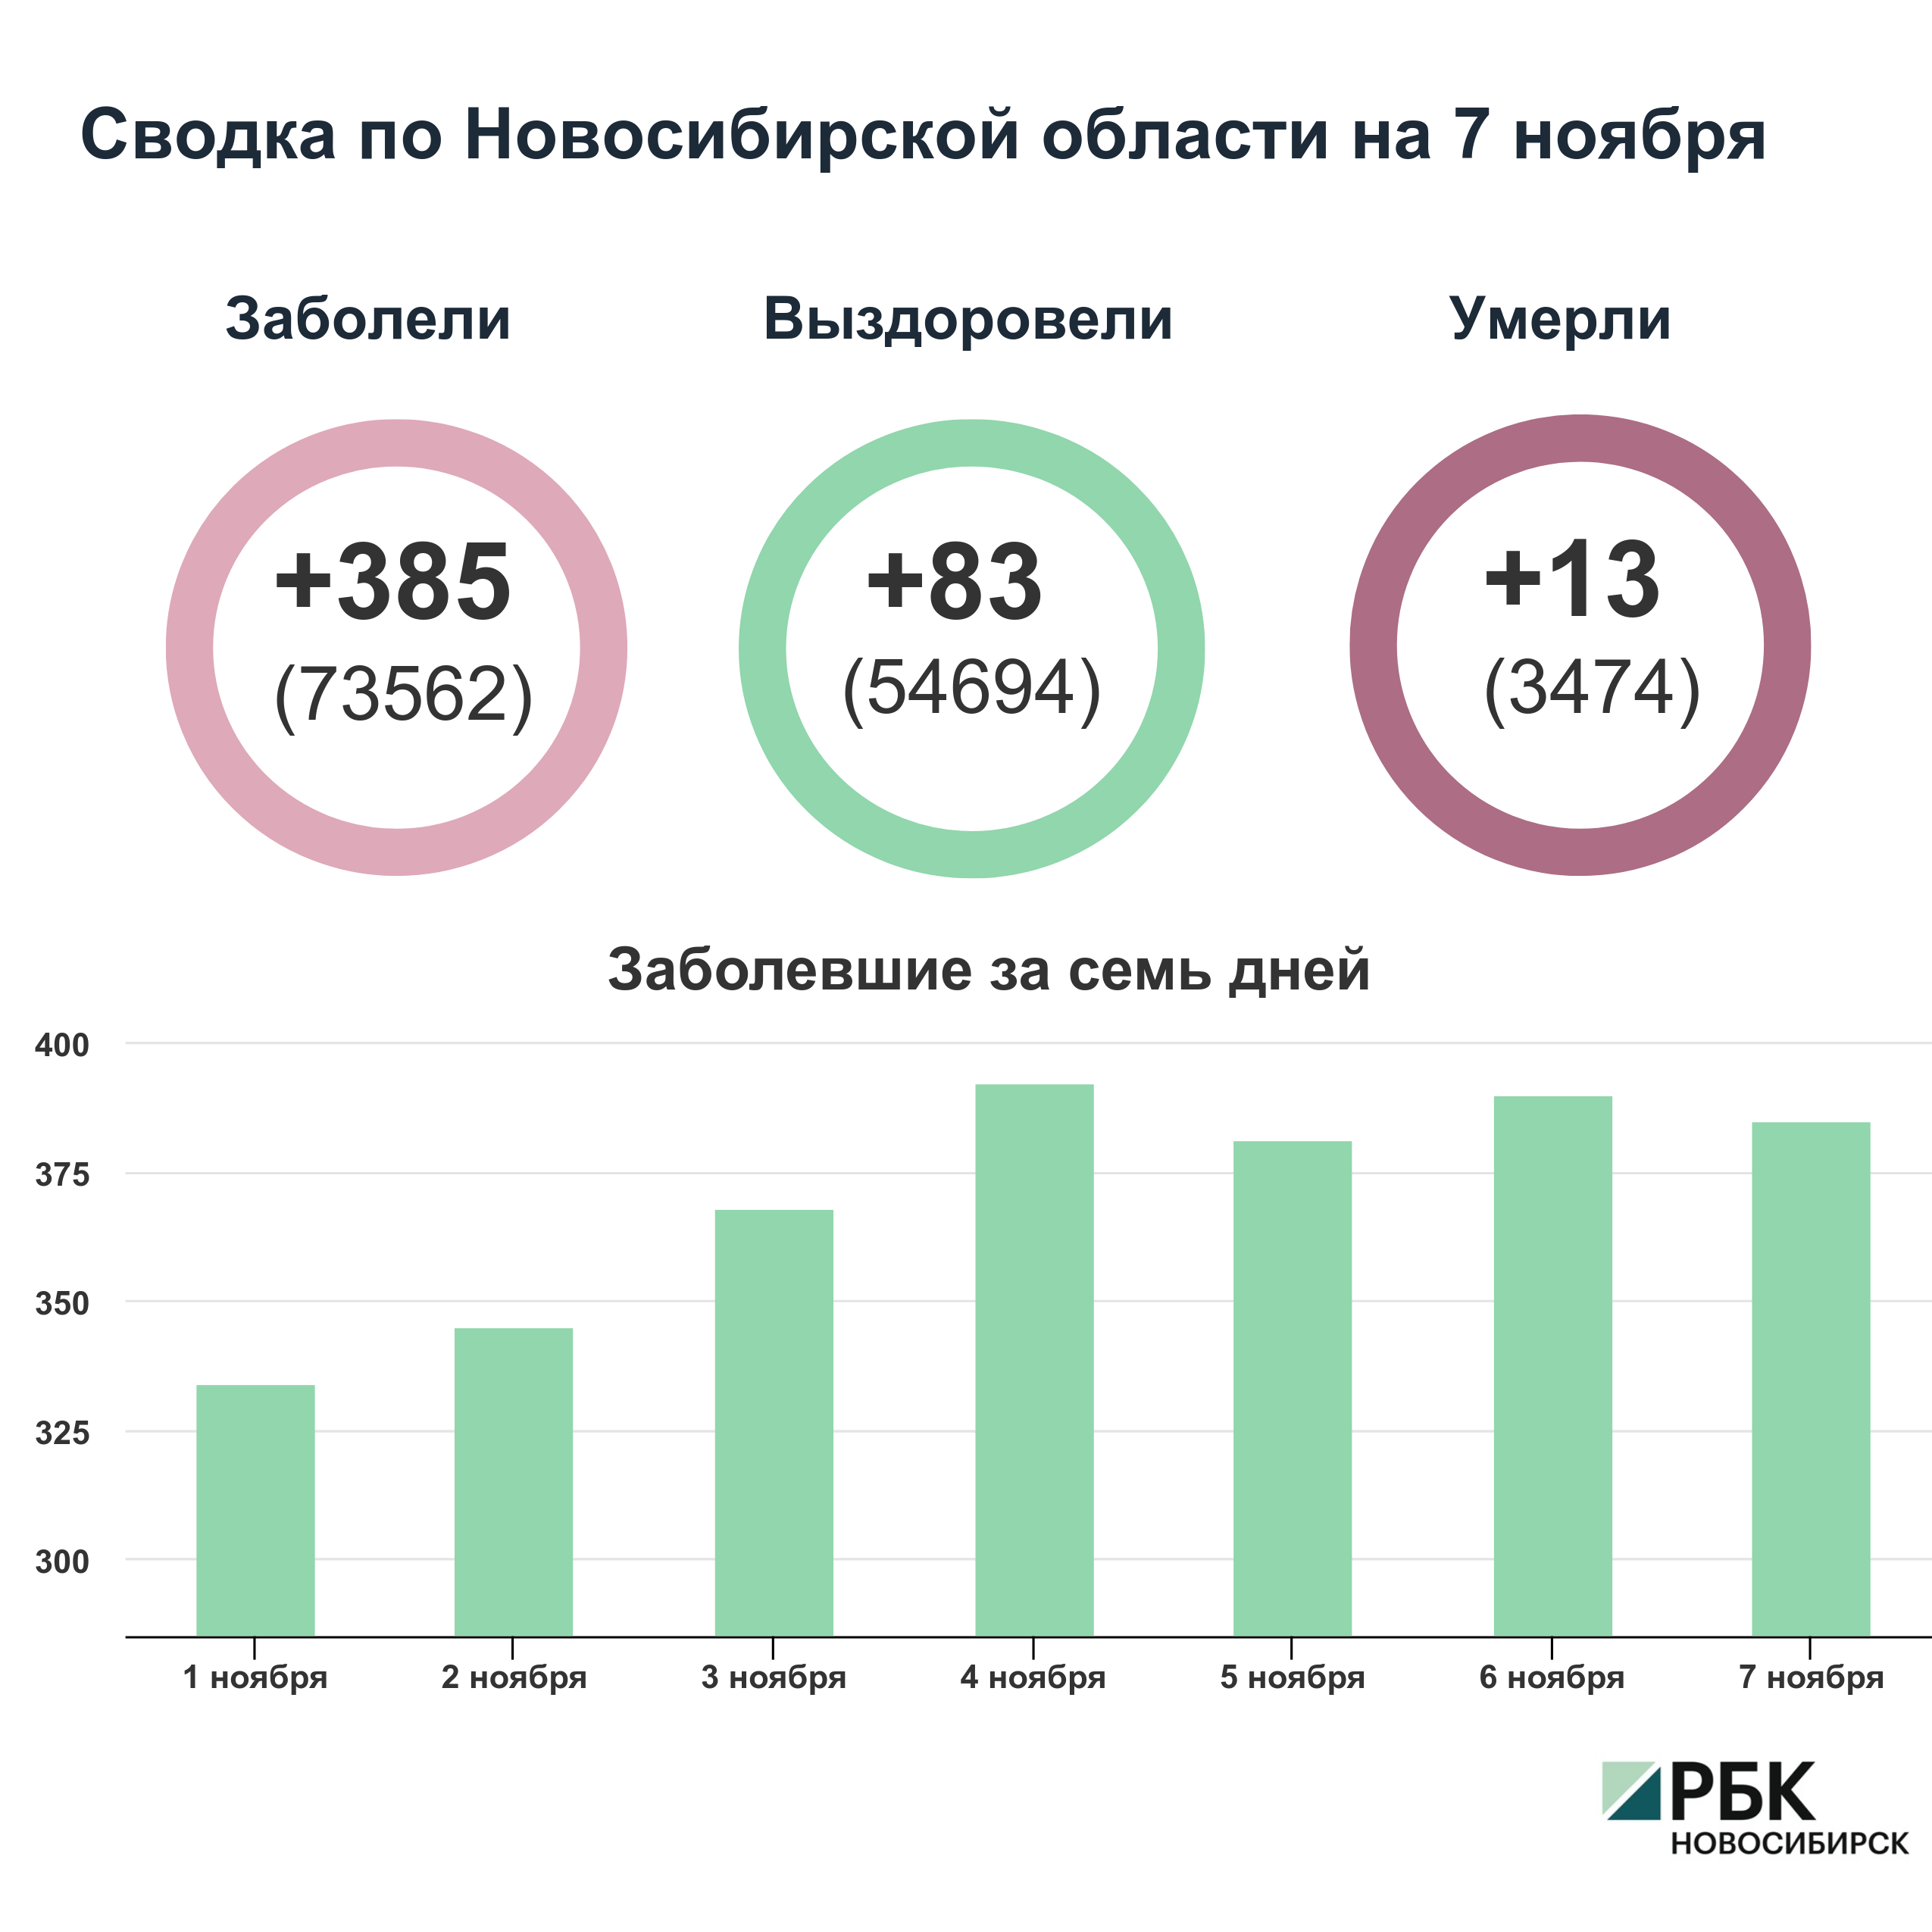 Коронавирус в Новосибирске: сводка на 7 ноября